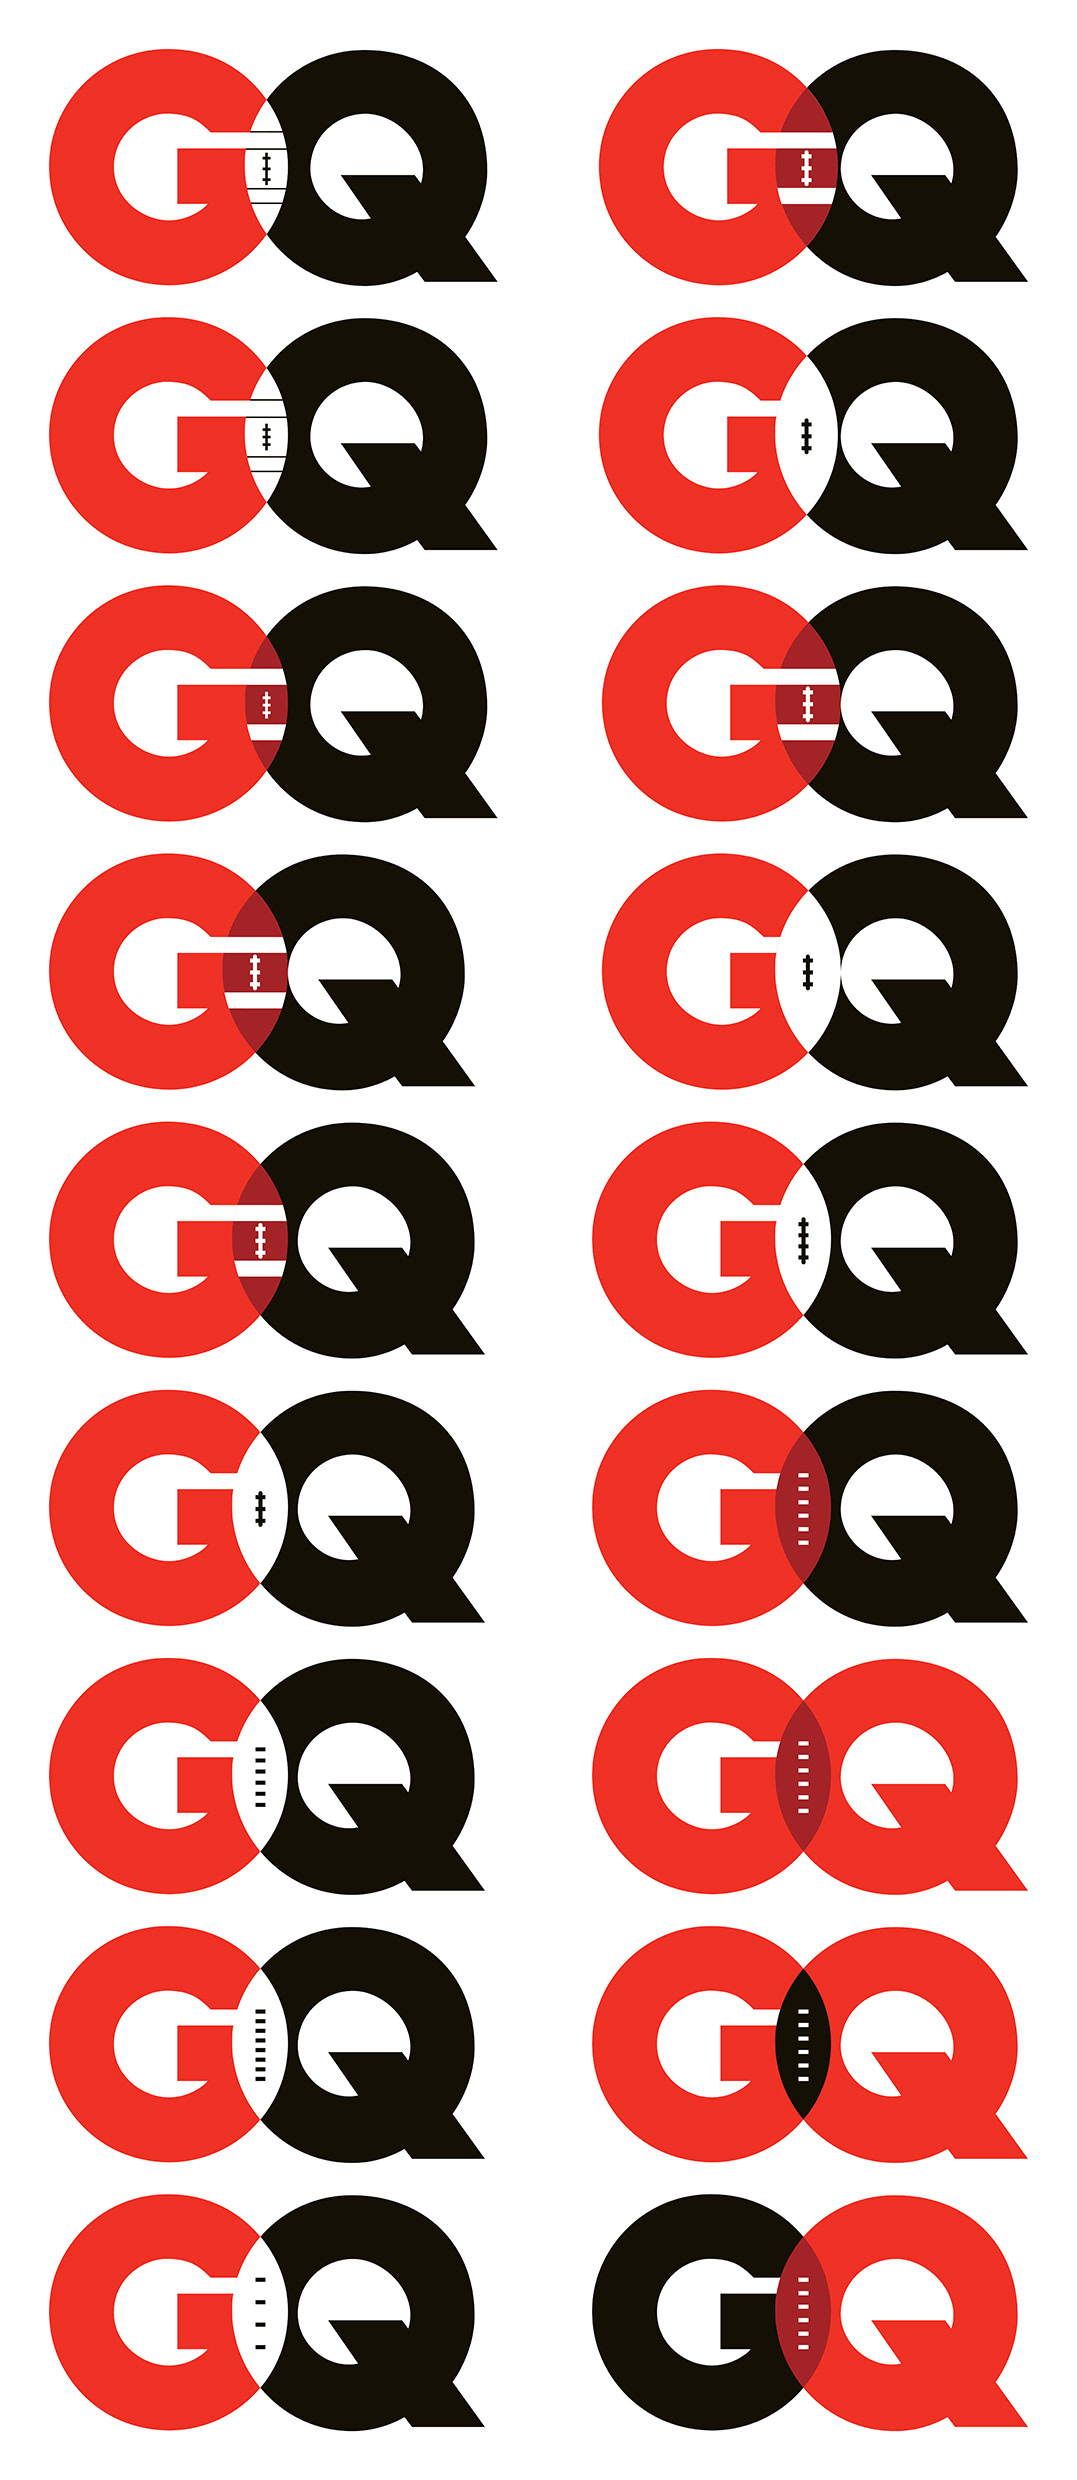 GQ football kaepernick rg3 logo design graphic